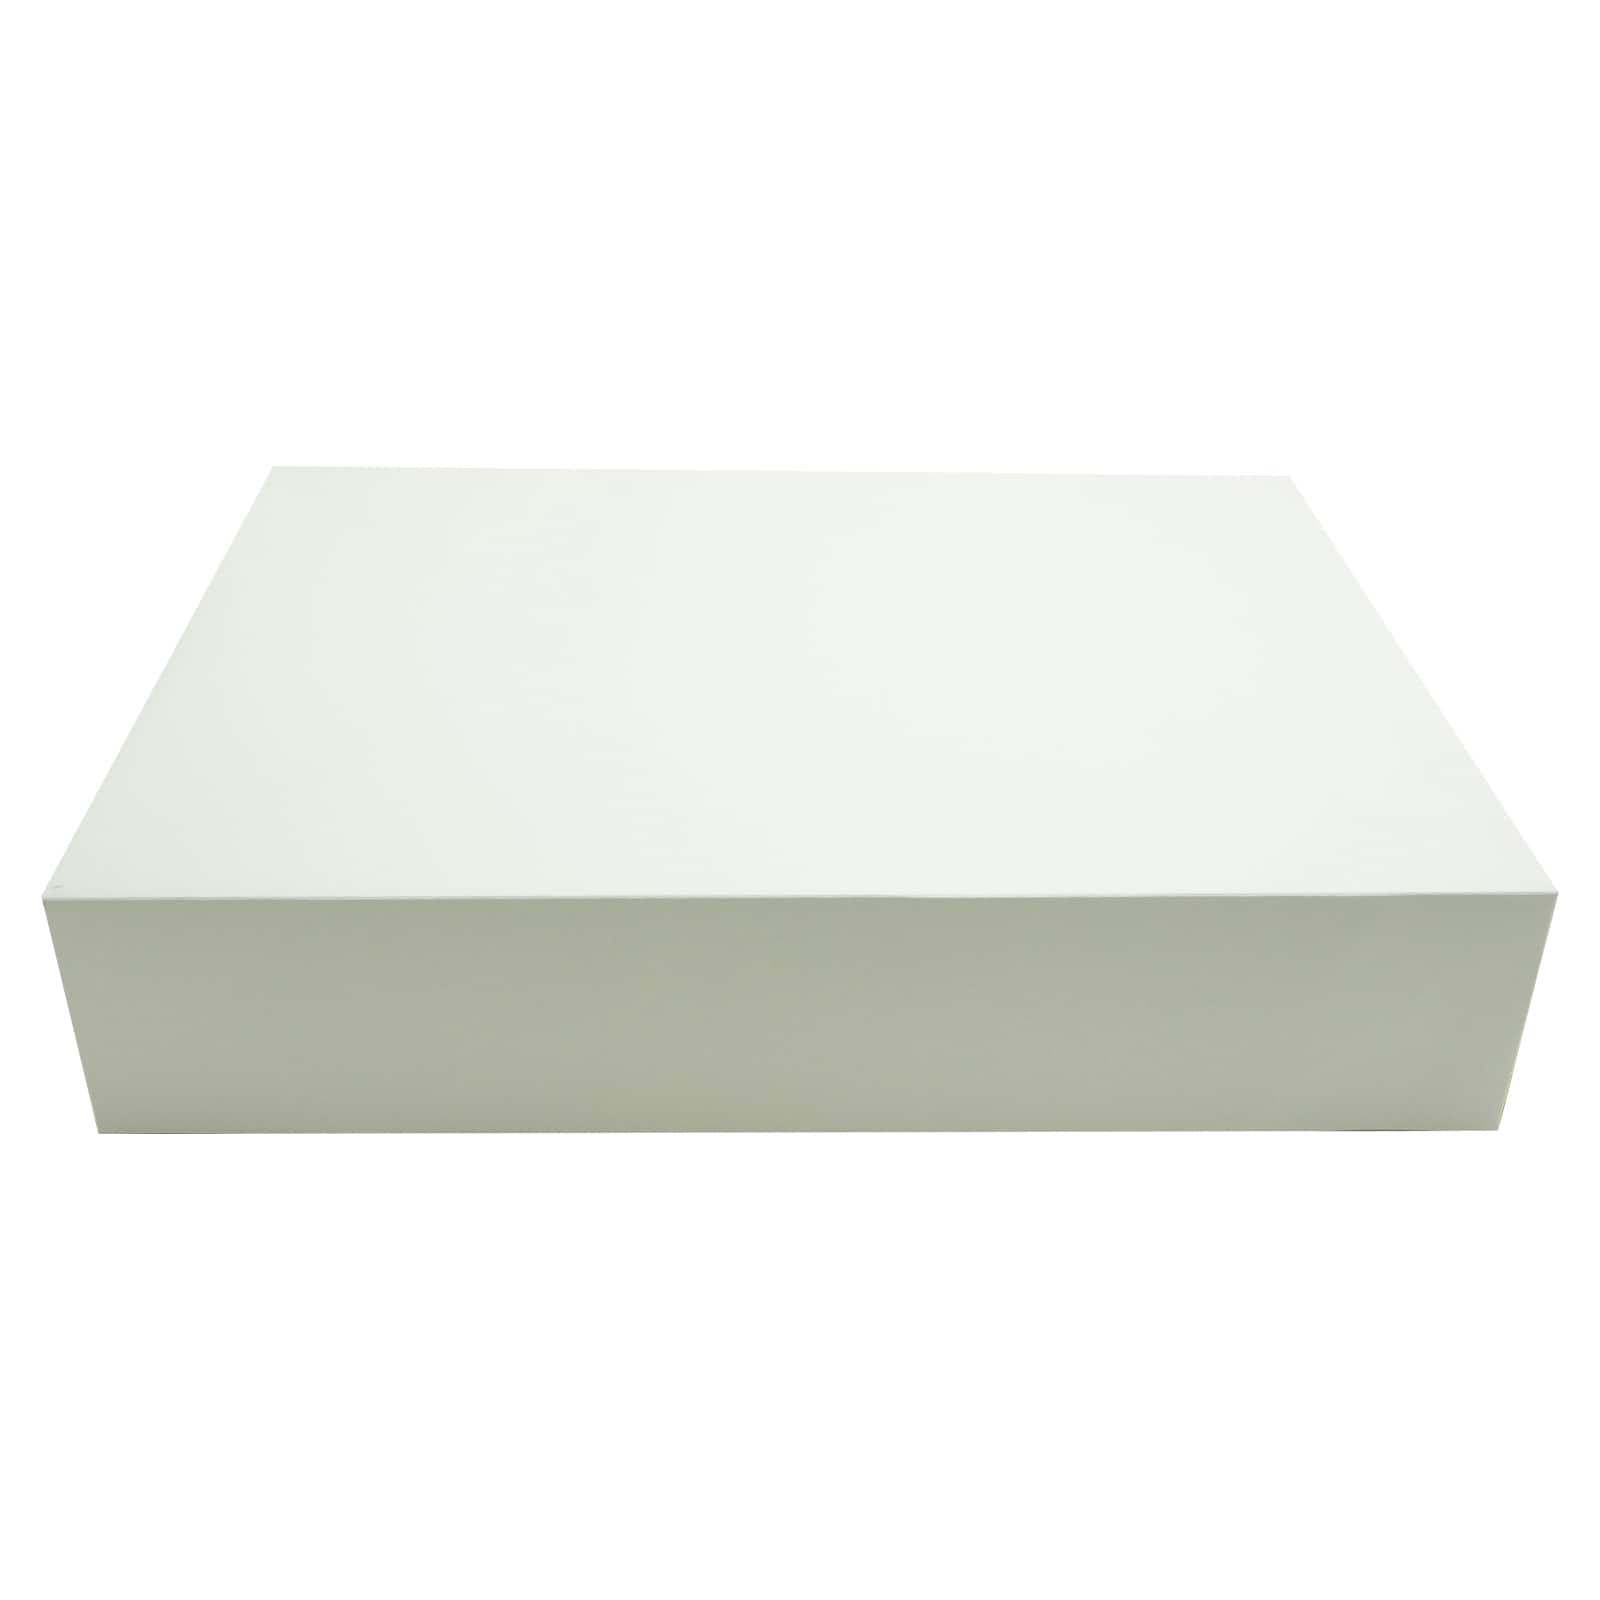 19" x 12" x 3" Case of 50 White Shirt Apparel Boxes